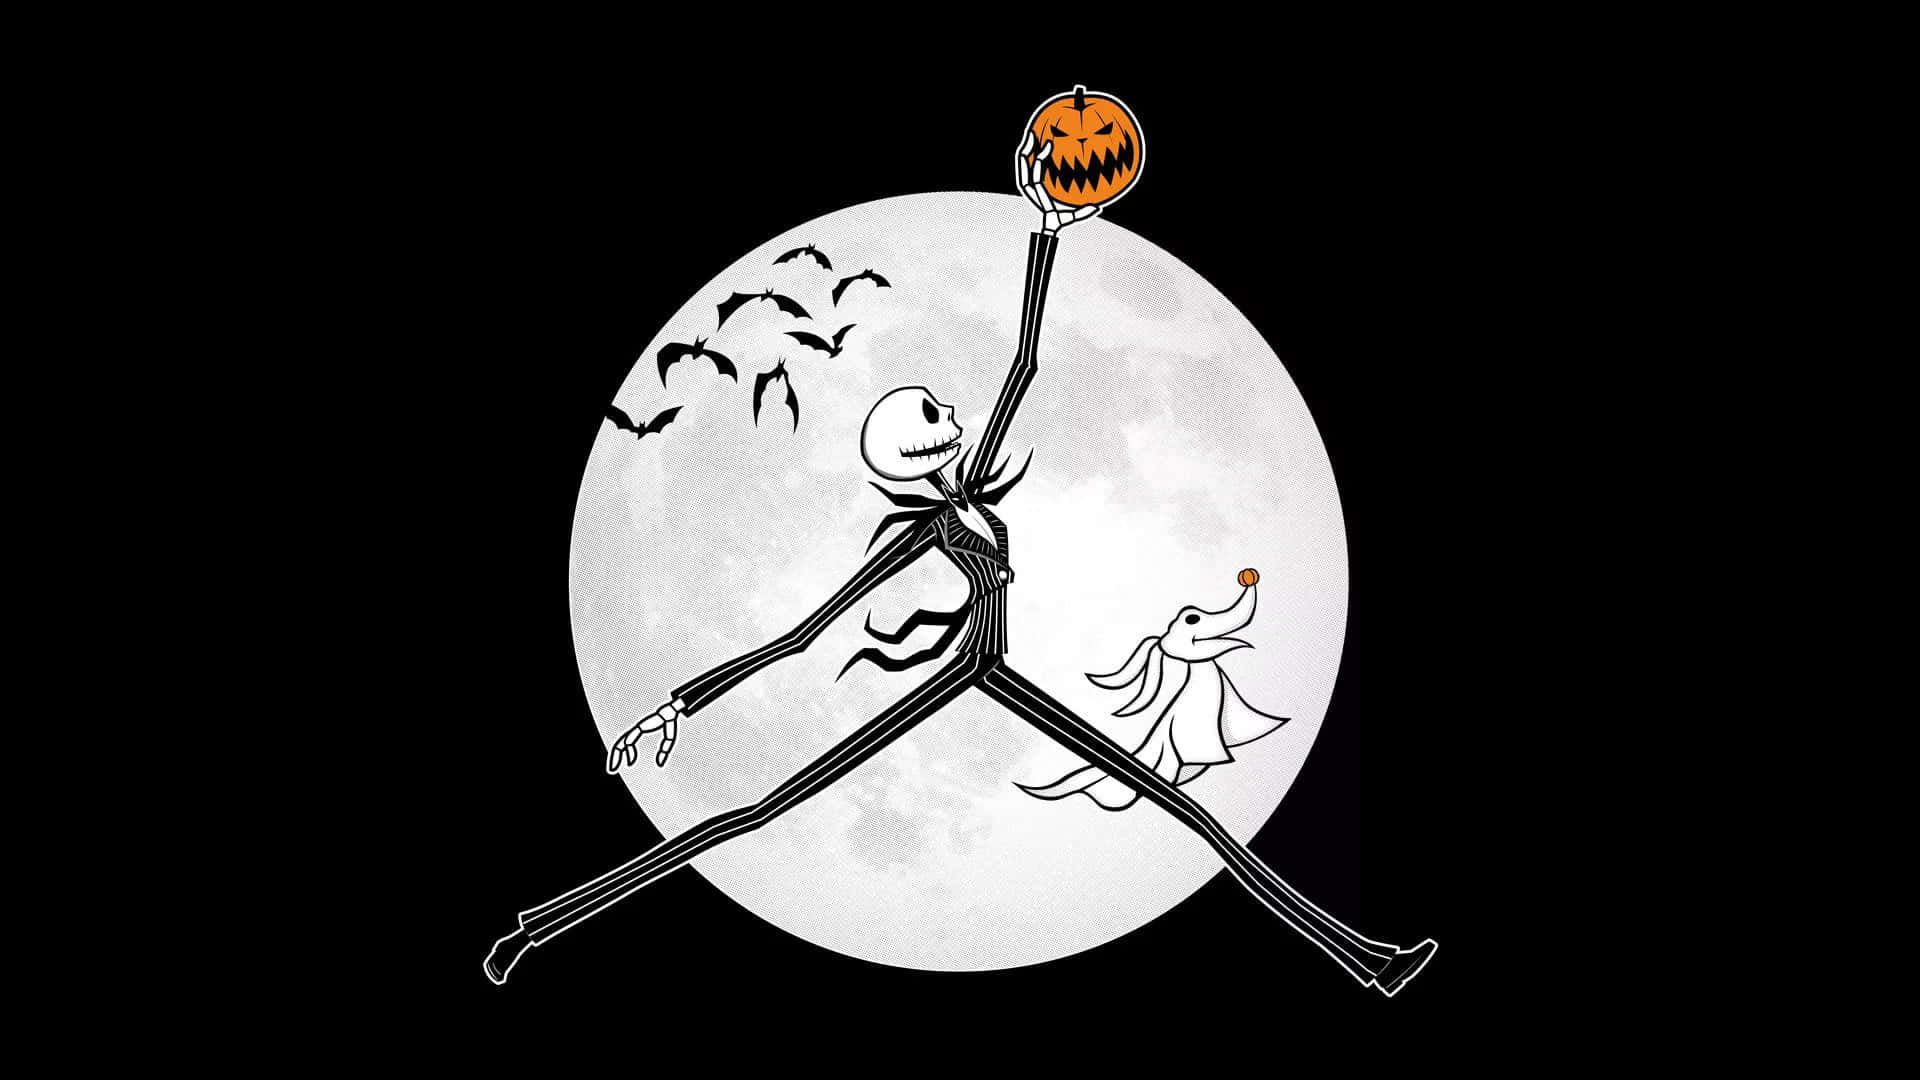 “Jack Skellington, the Pumpkin King of Halloween Town”